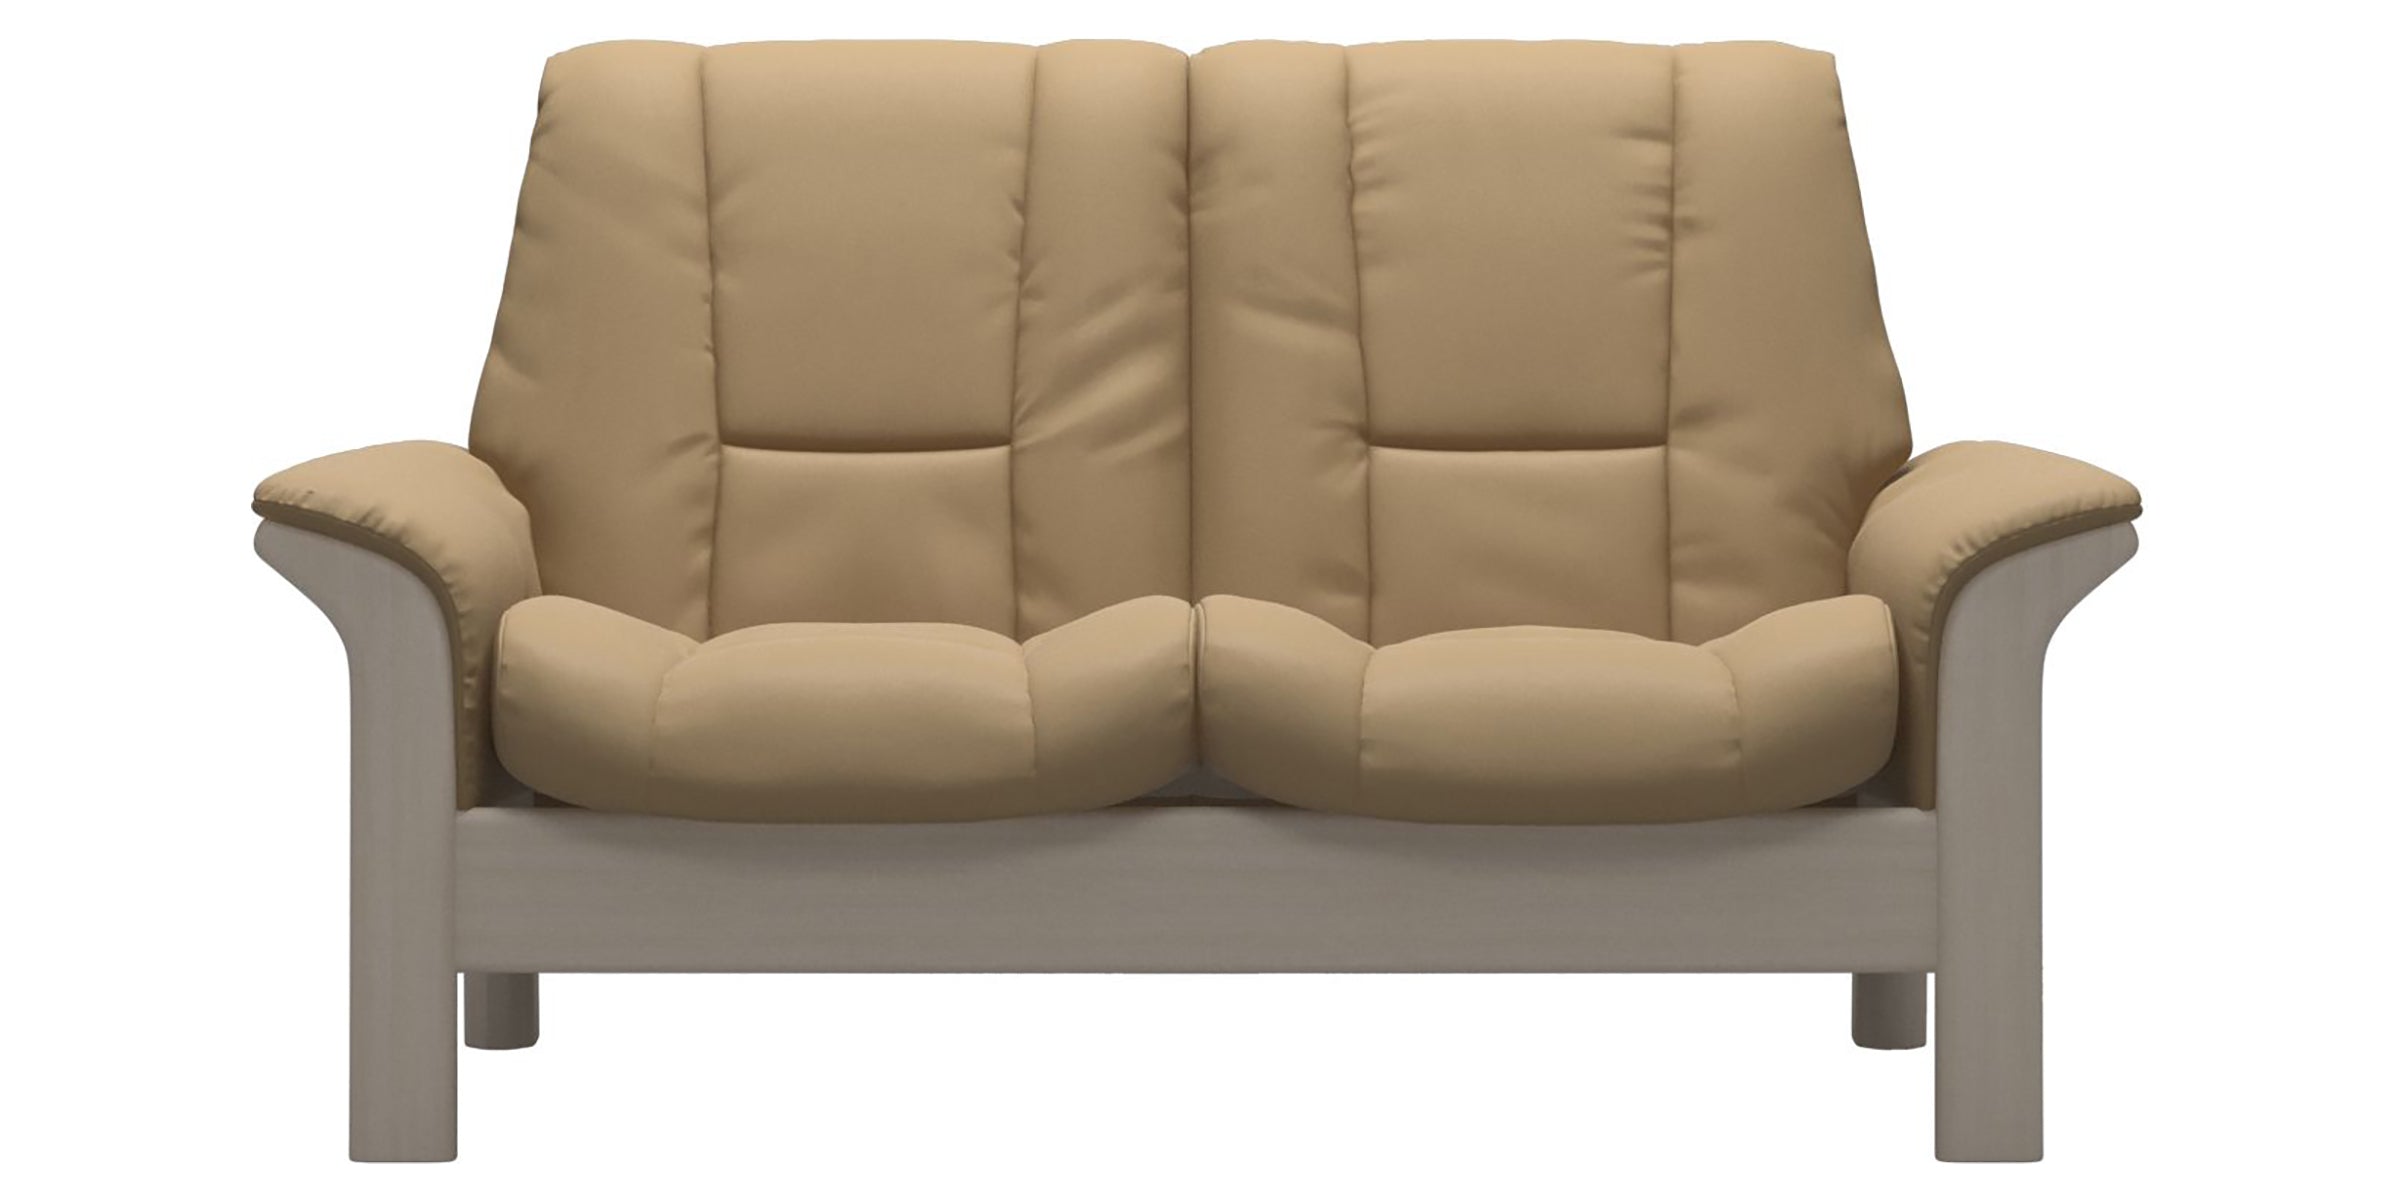 Paloma Leather Sand and Whitewash Base | Stressless Windsor 2-Seater Low Back Sofa | Valley Ridge Furniture